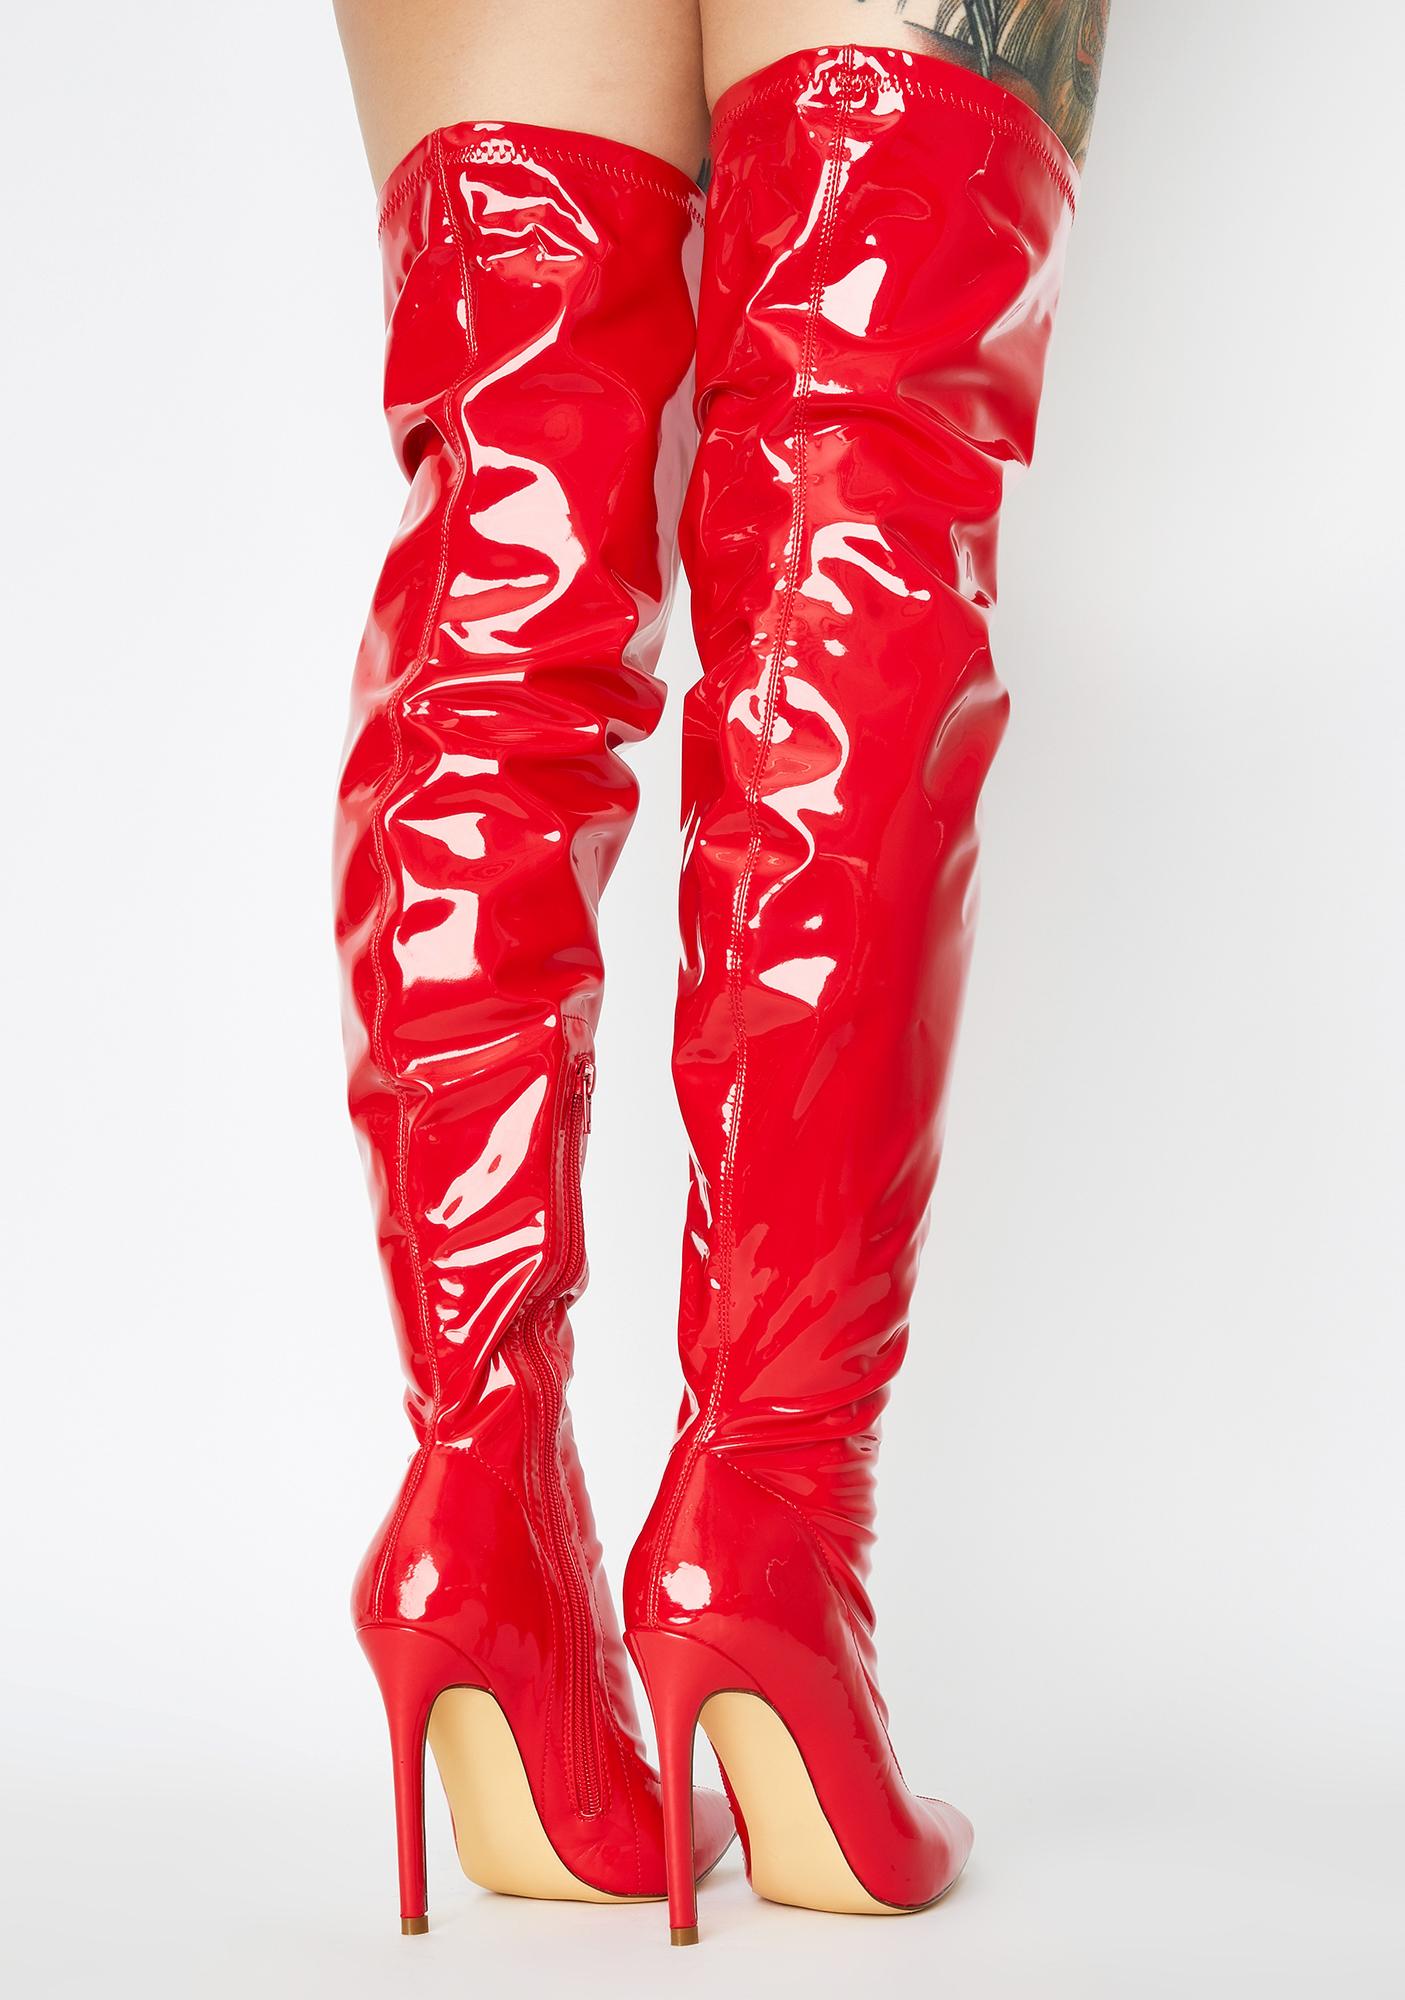 Vinyl Thigh High Stiletto Boots Red | Dolls Kill